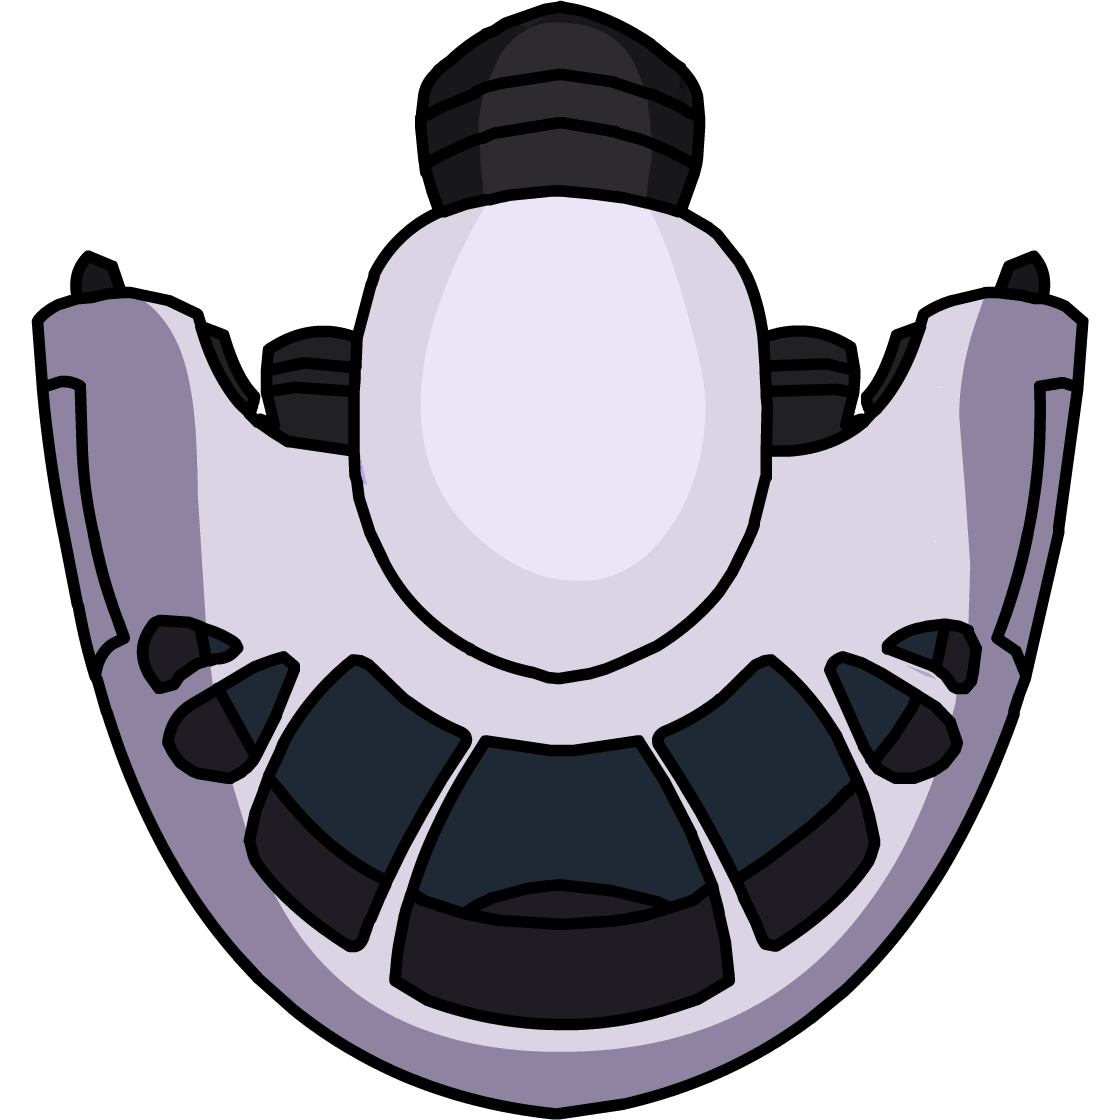 Spaceship - Club Penguin Wiki - The free, editable encyclopedia ...